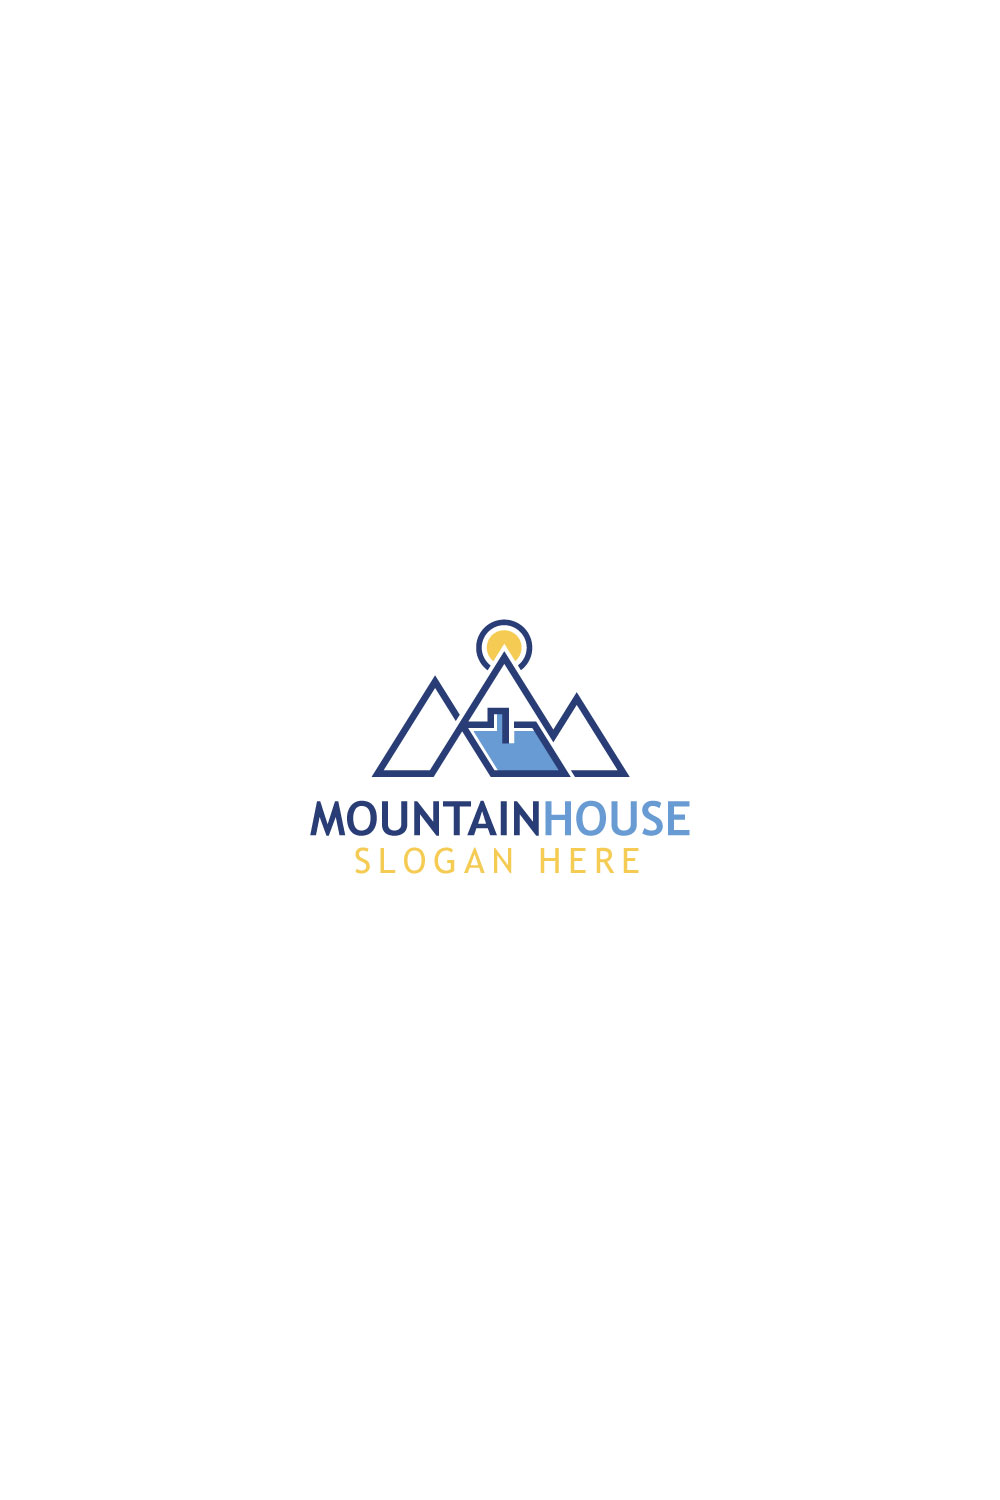 Professional Mountain House Logo design pinterest preview image.